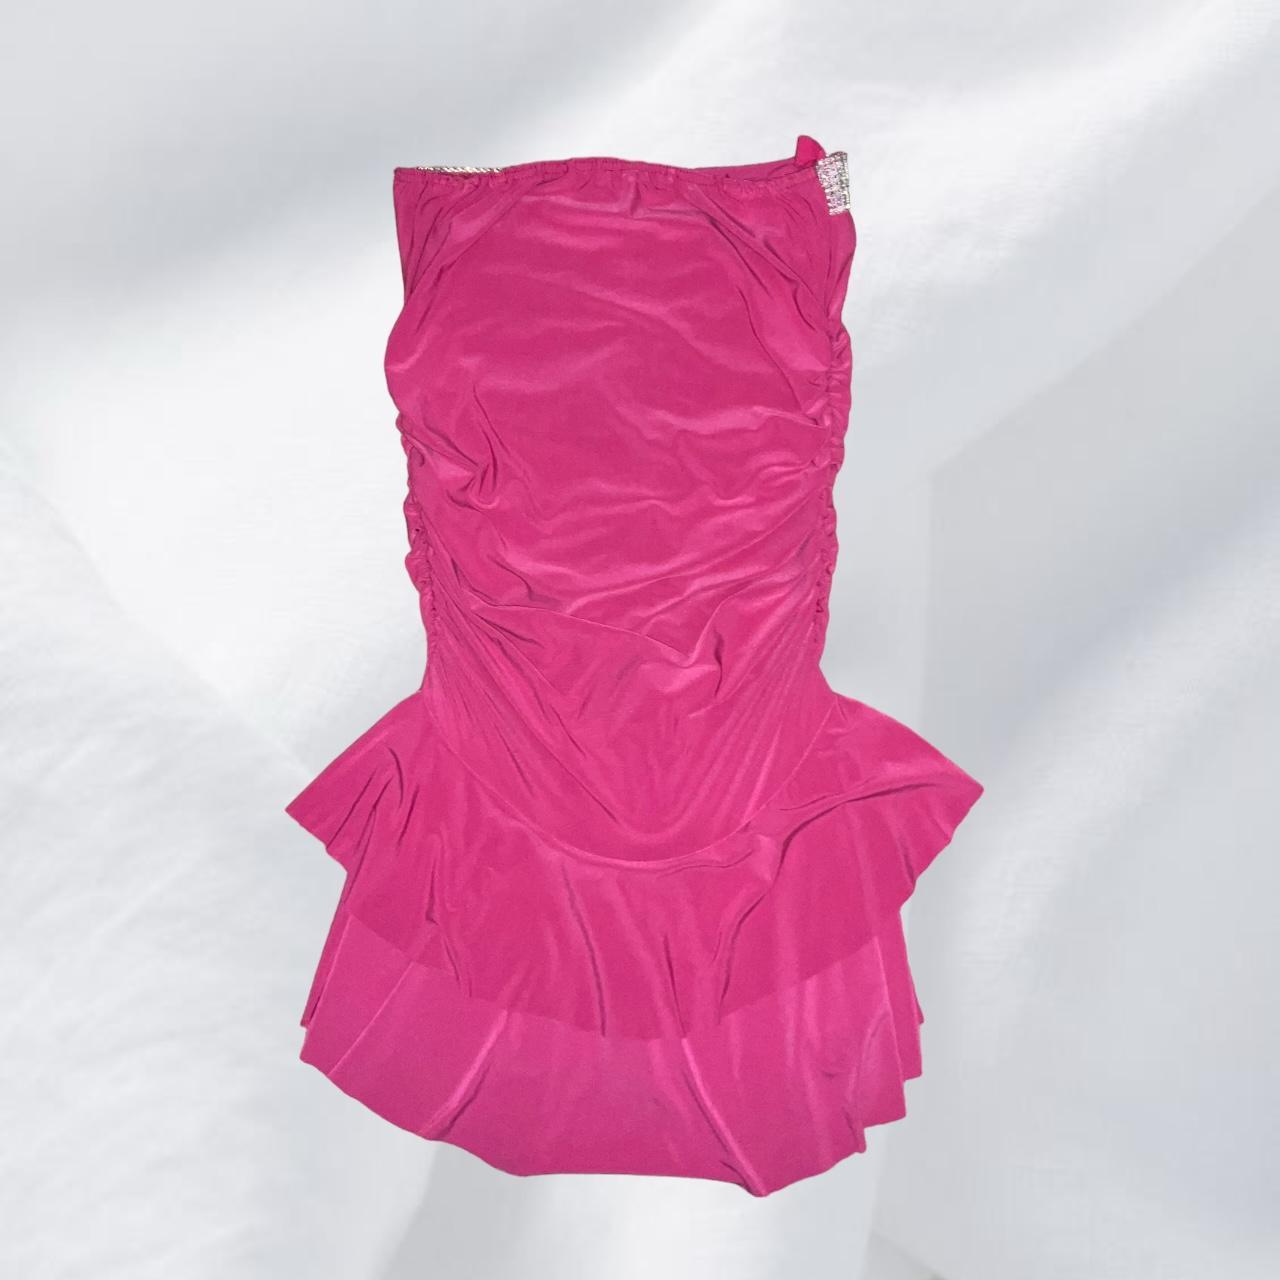 y2k pink slip dress adorable sheer no boundaries - Depop